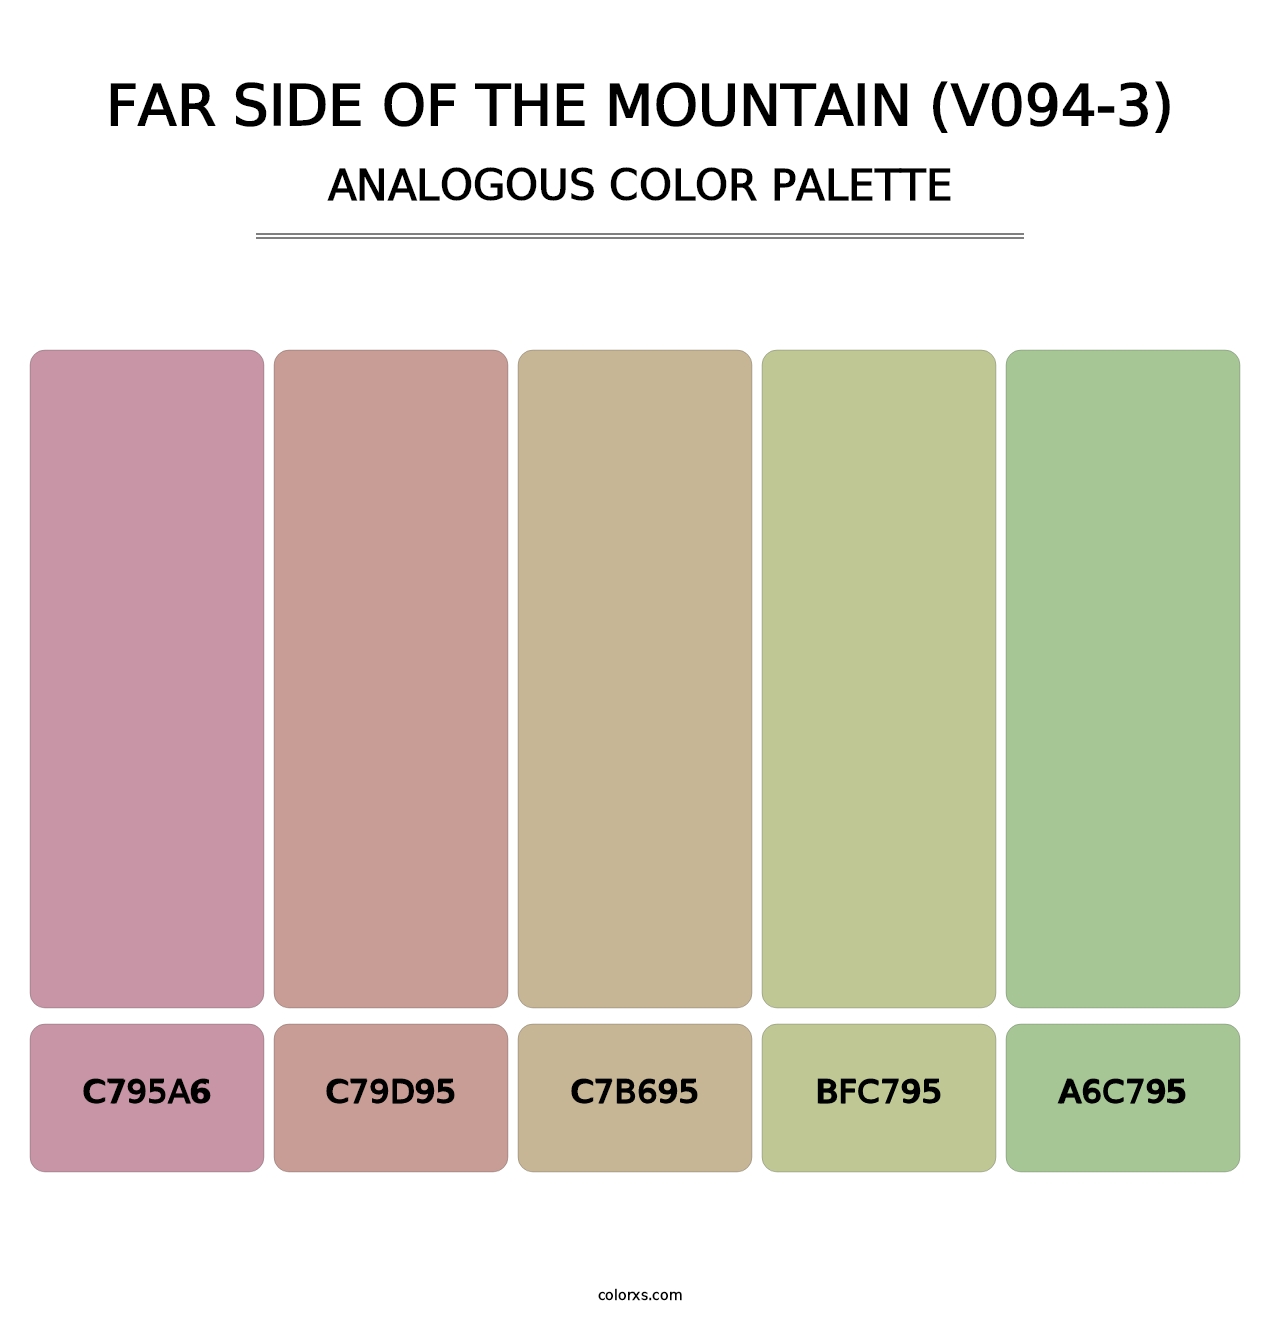 Far Side of the Mountain (V094-3) - Analogous Color Palette